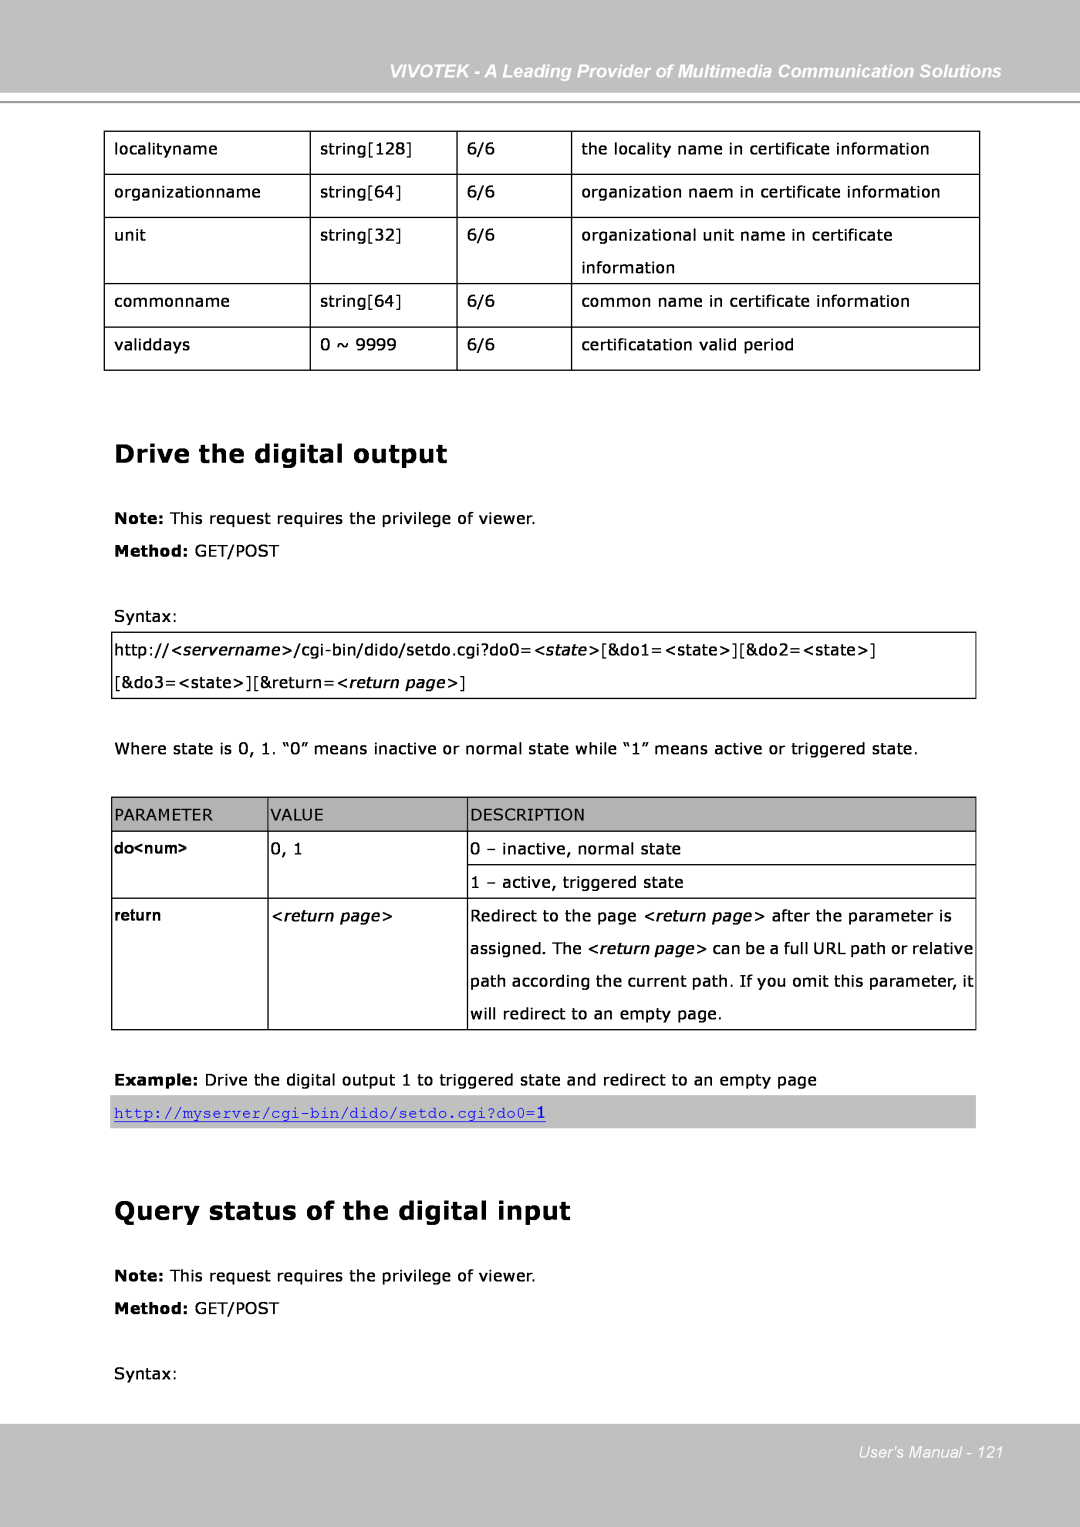 Vivotek FD7141(V) manual Drive the digital output, Query status of the digital input, Method: GET/POST, do<num>, return 